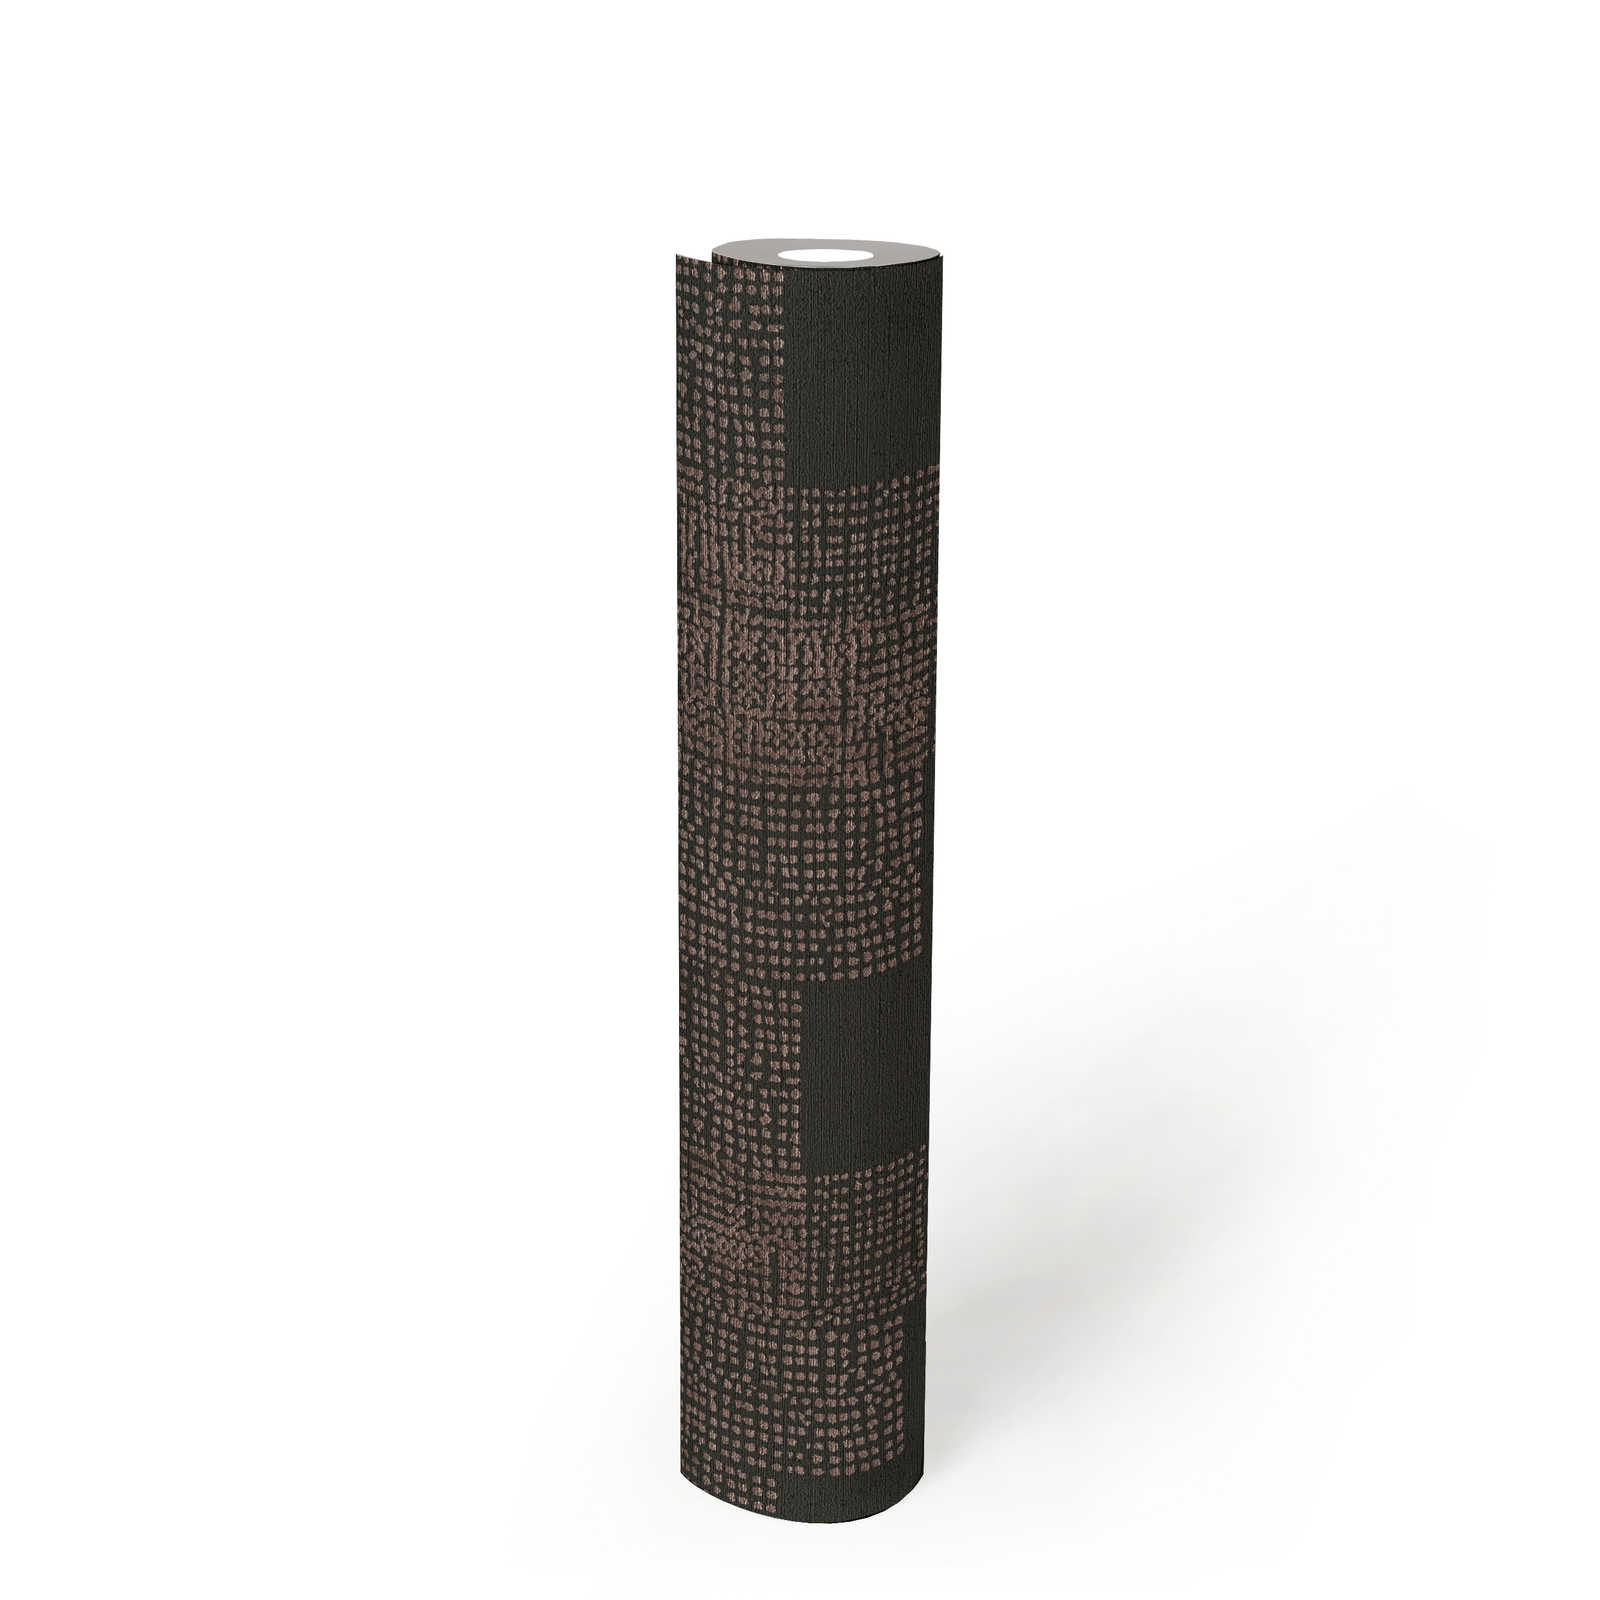             Geometrisch behangpapier ethno design - zwart, metallic
        